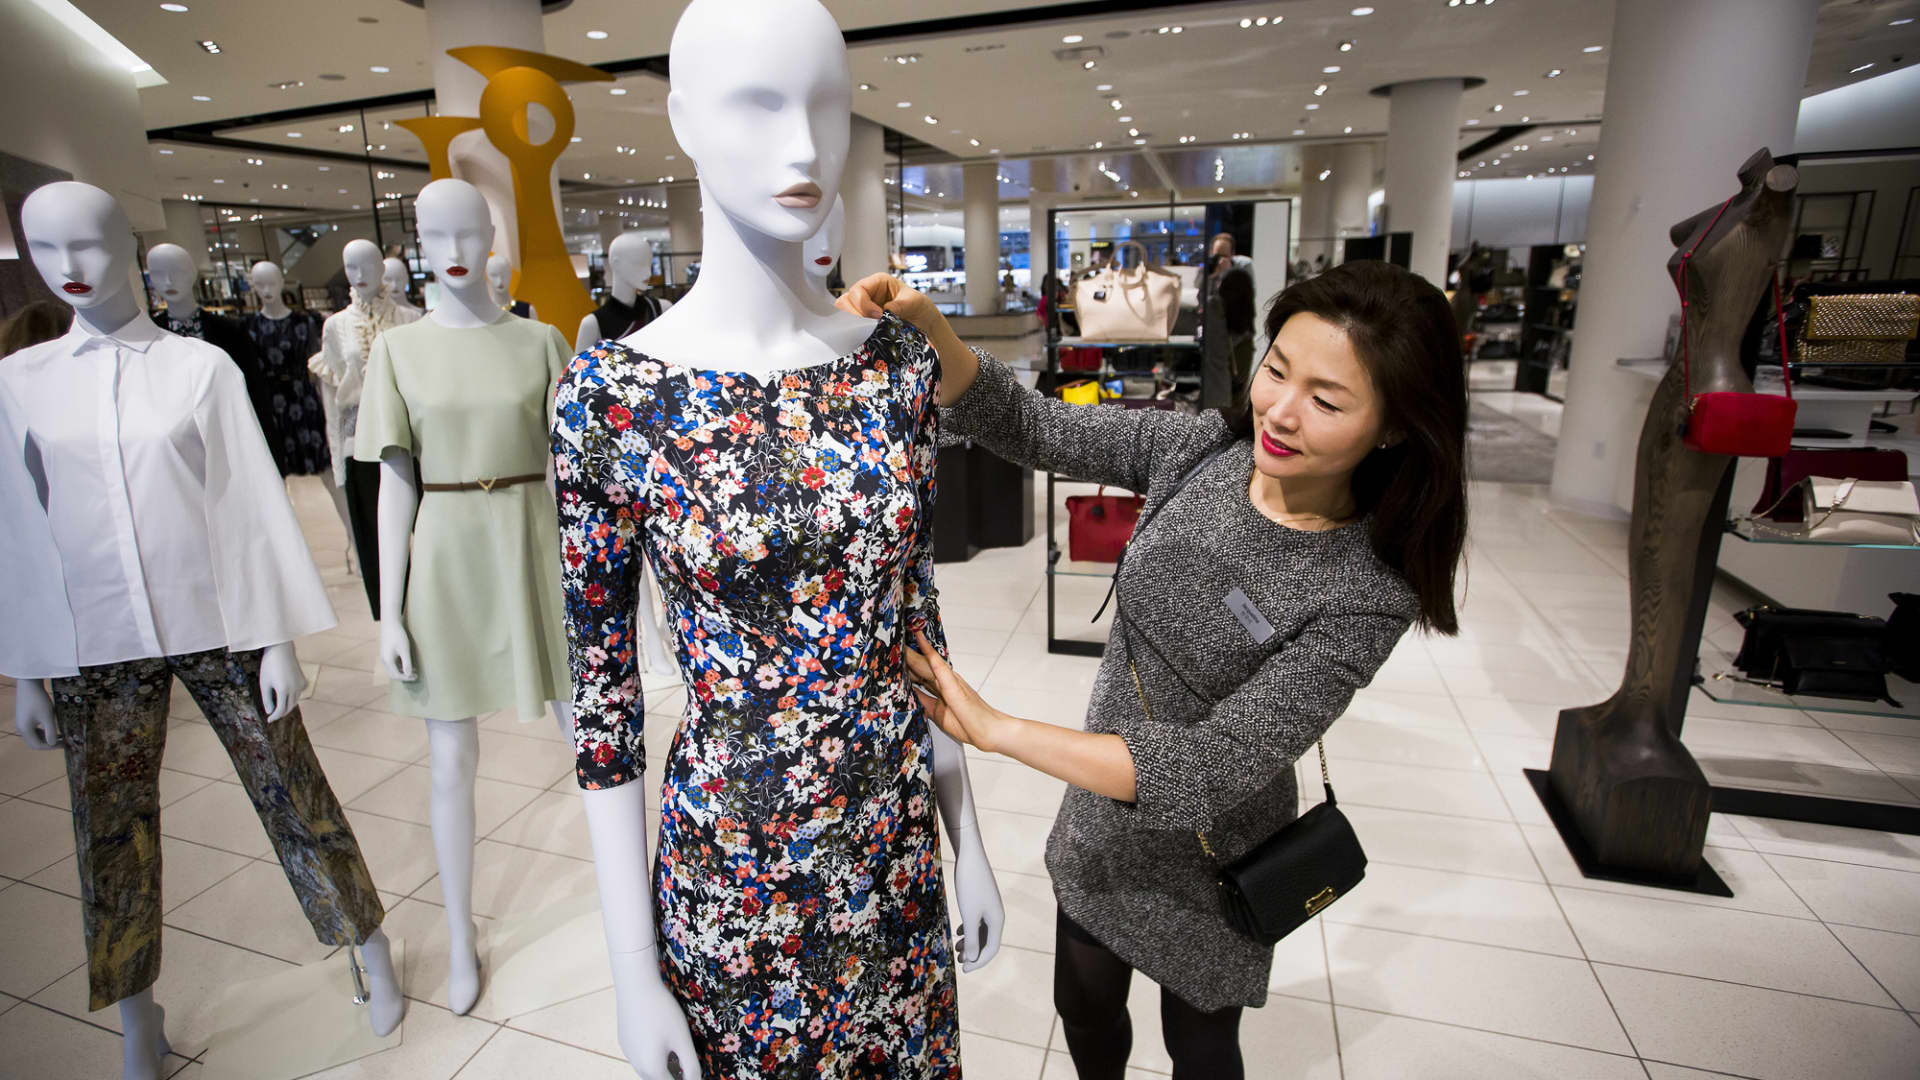 As Americans splurge on dressing up again, retailers like Macy’s and Ulta benefit